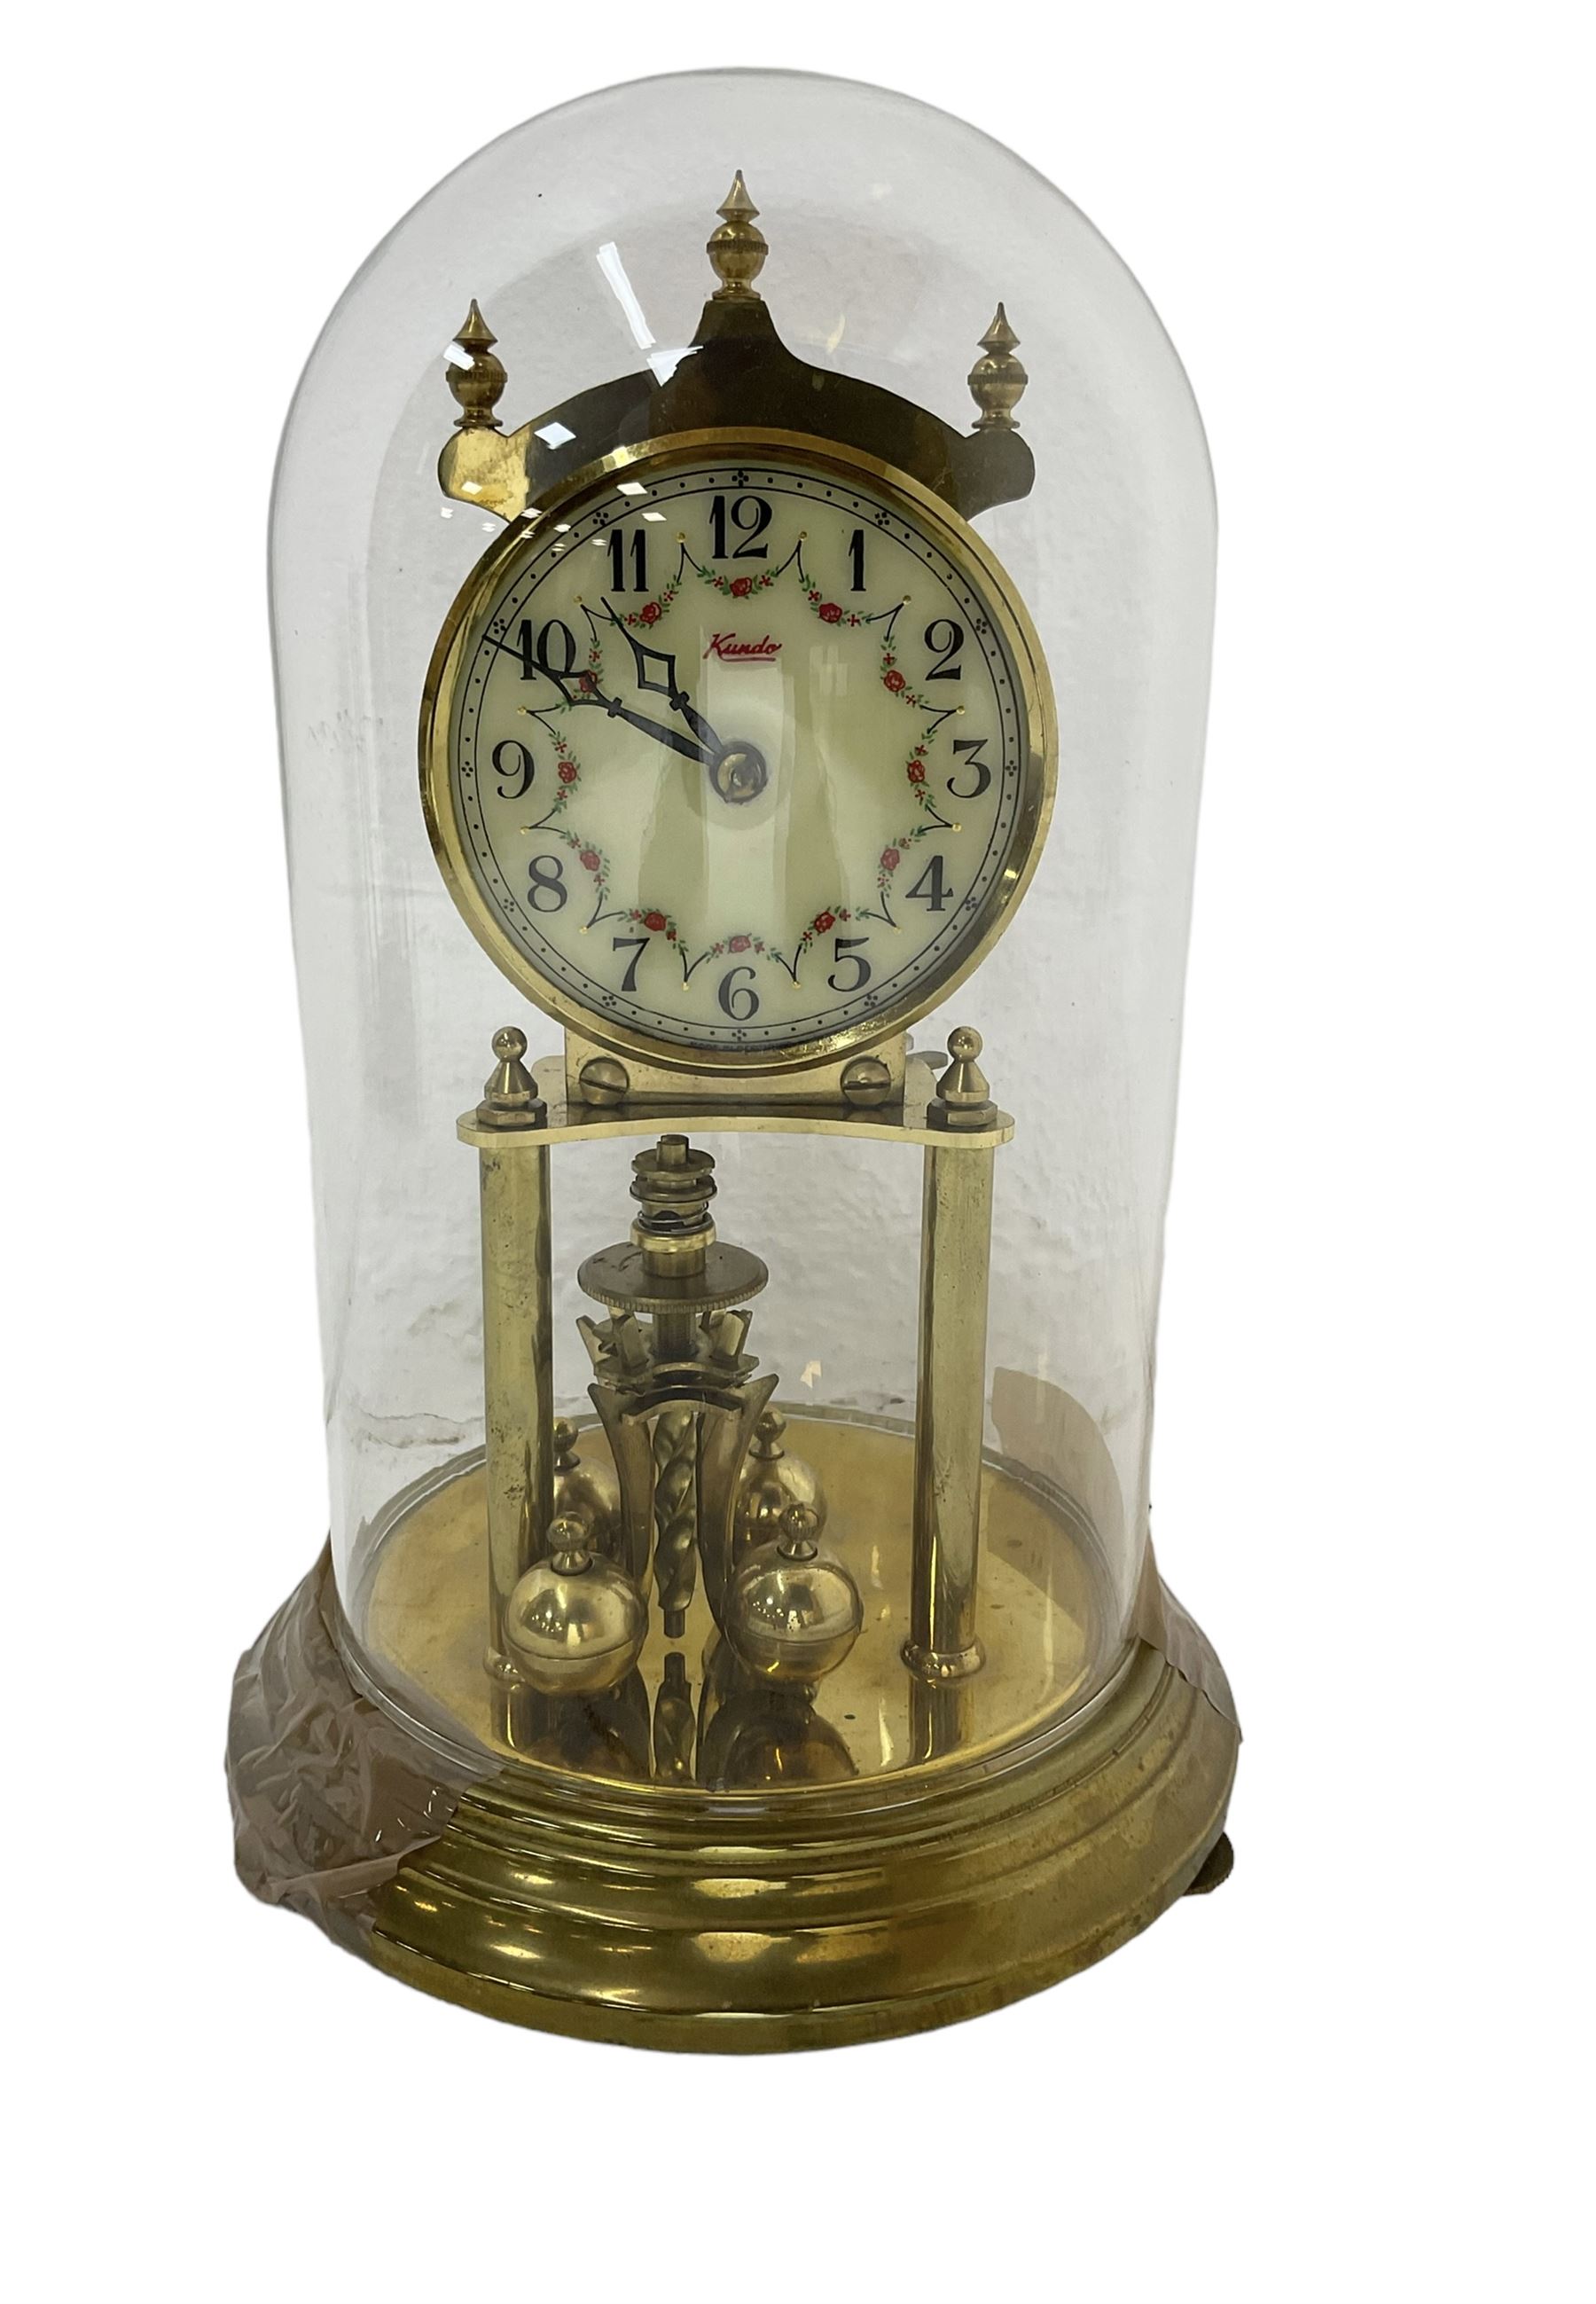 Two 20th century torsion clocks - Image 2 of 3